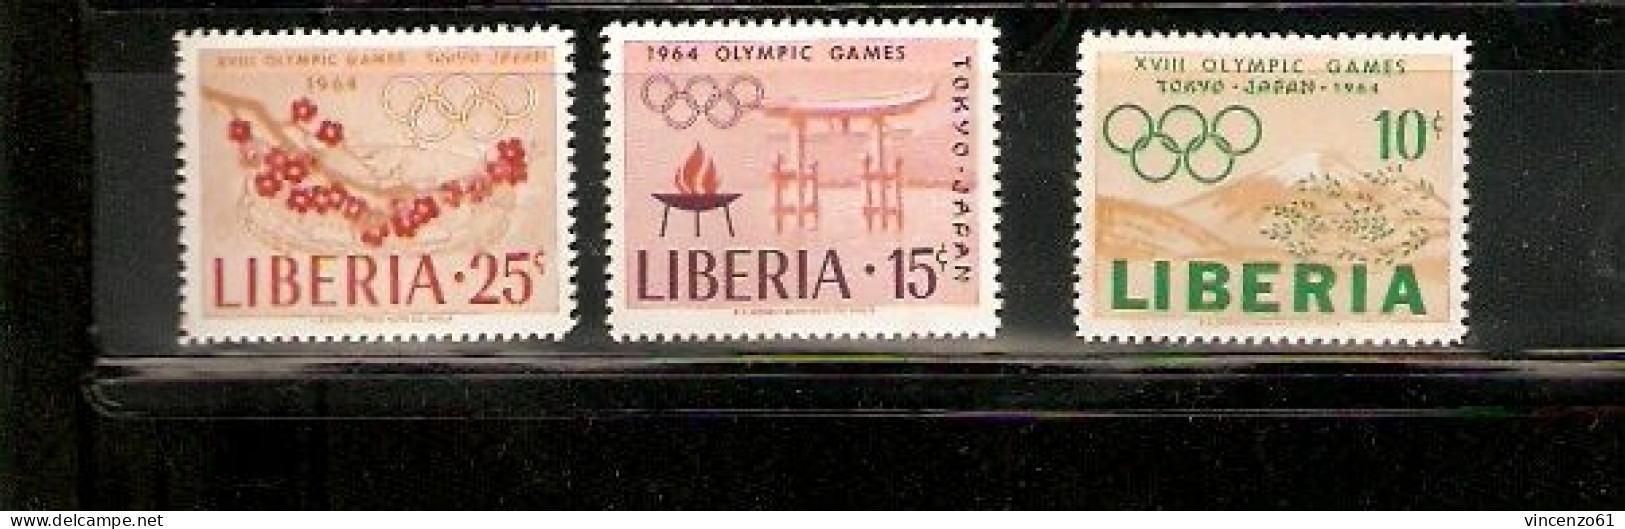 LIBERIA TOKIO OLIMPIC GAME 1964 - Verano 1964: Tokio